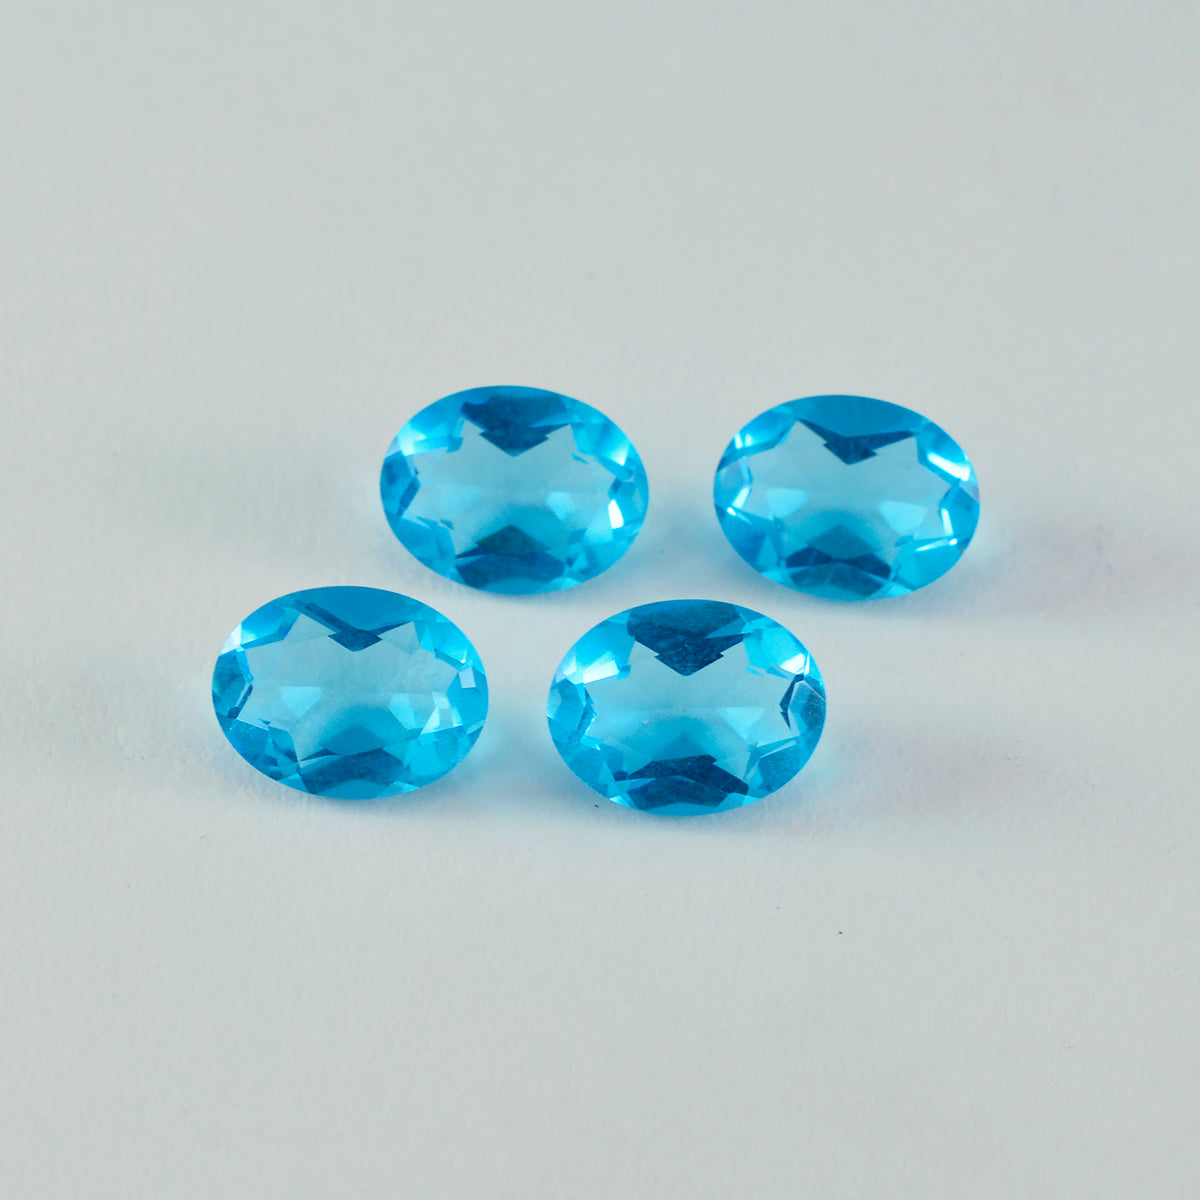 riyogems 1 pezzo di topazio blu cz sfaccettato 9x11 mm di forma ovale, gemme sfuse di ottima qualità